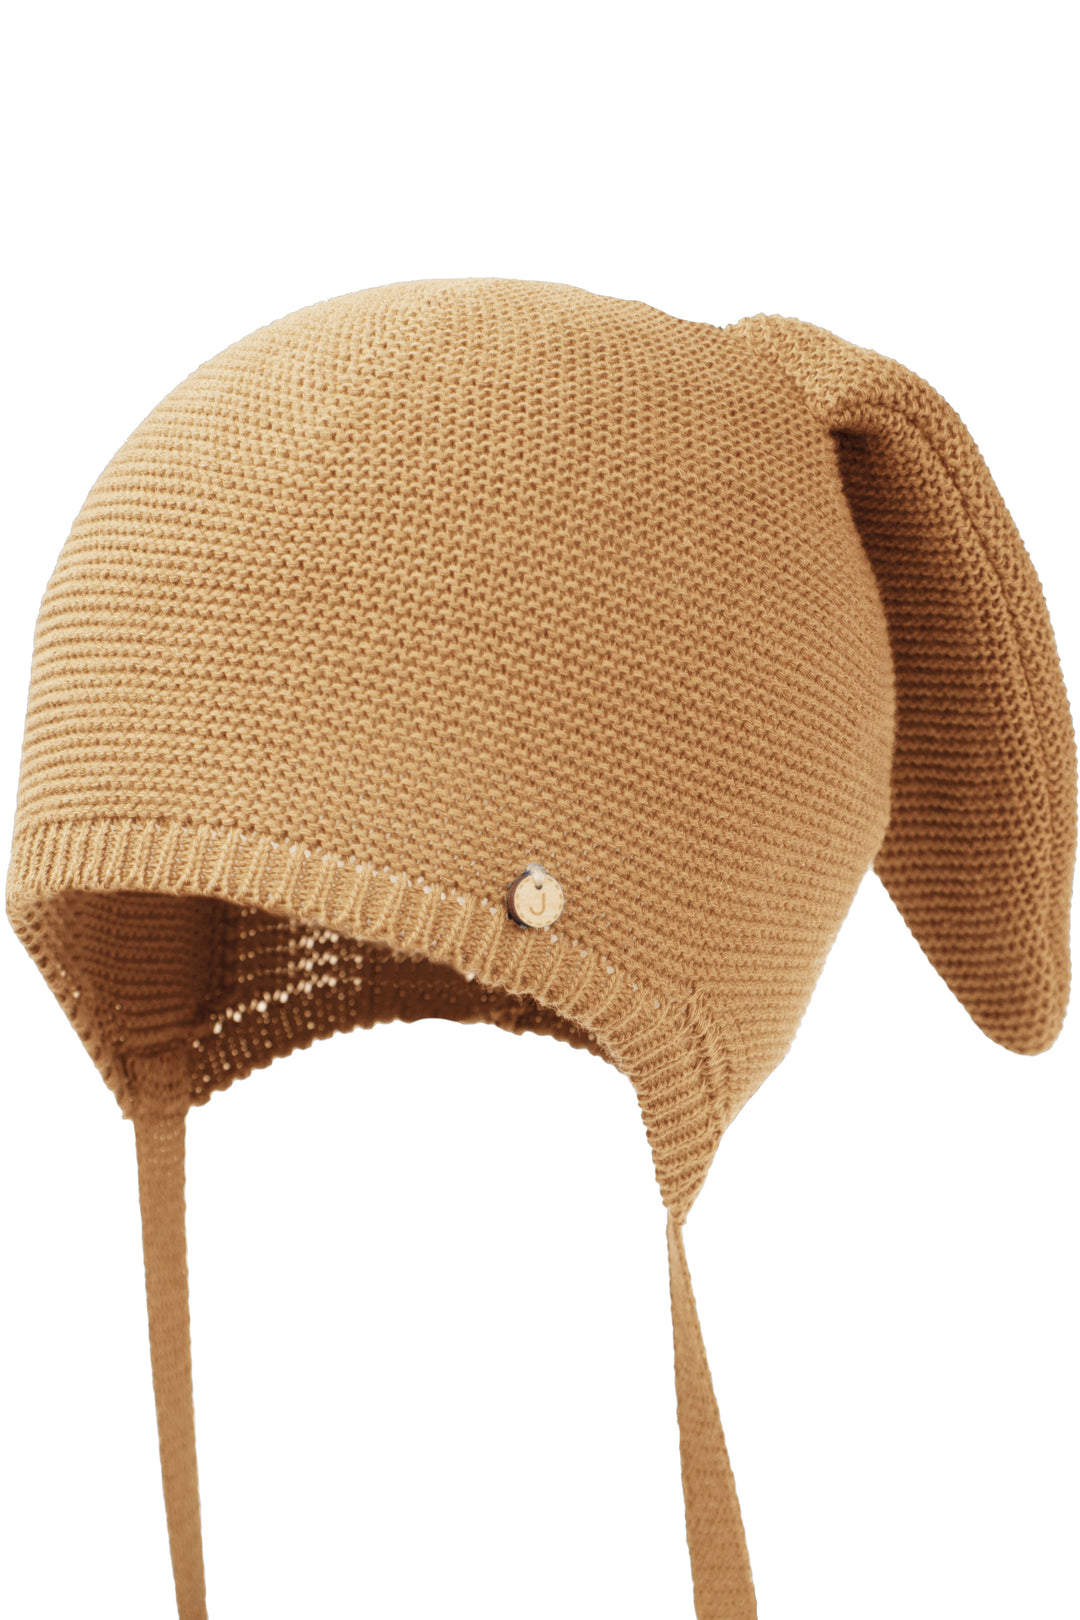 Jamiks "Bugs" Caramel Knit Bunny Hat | iphoneandroidapplications